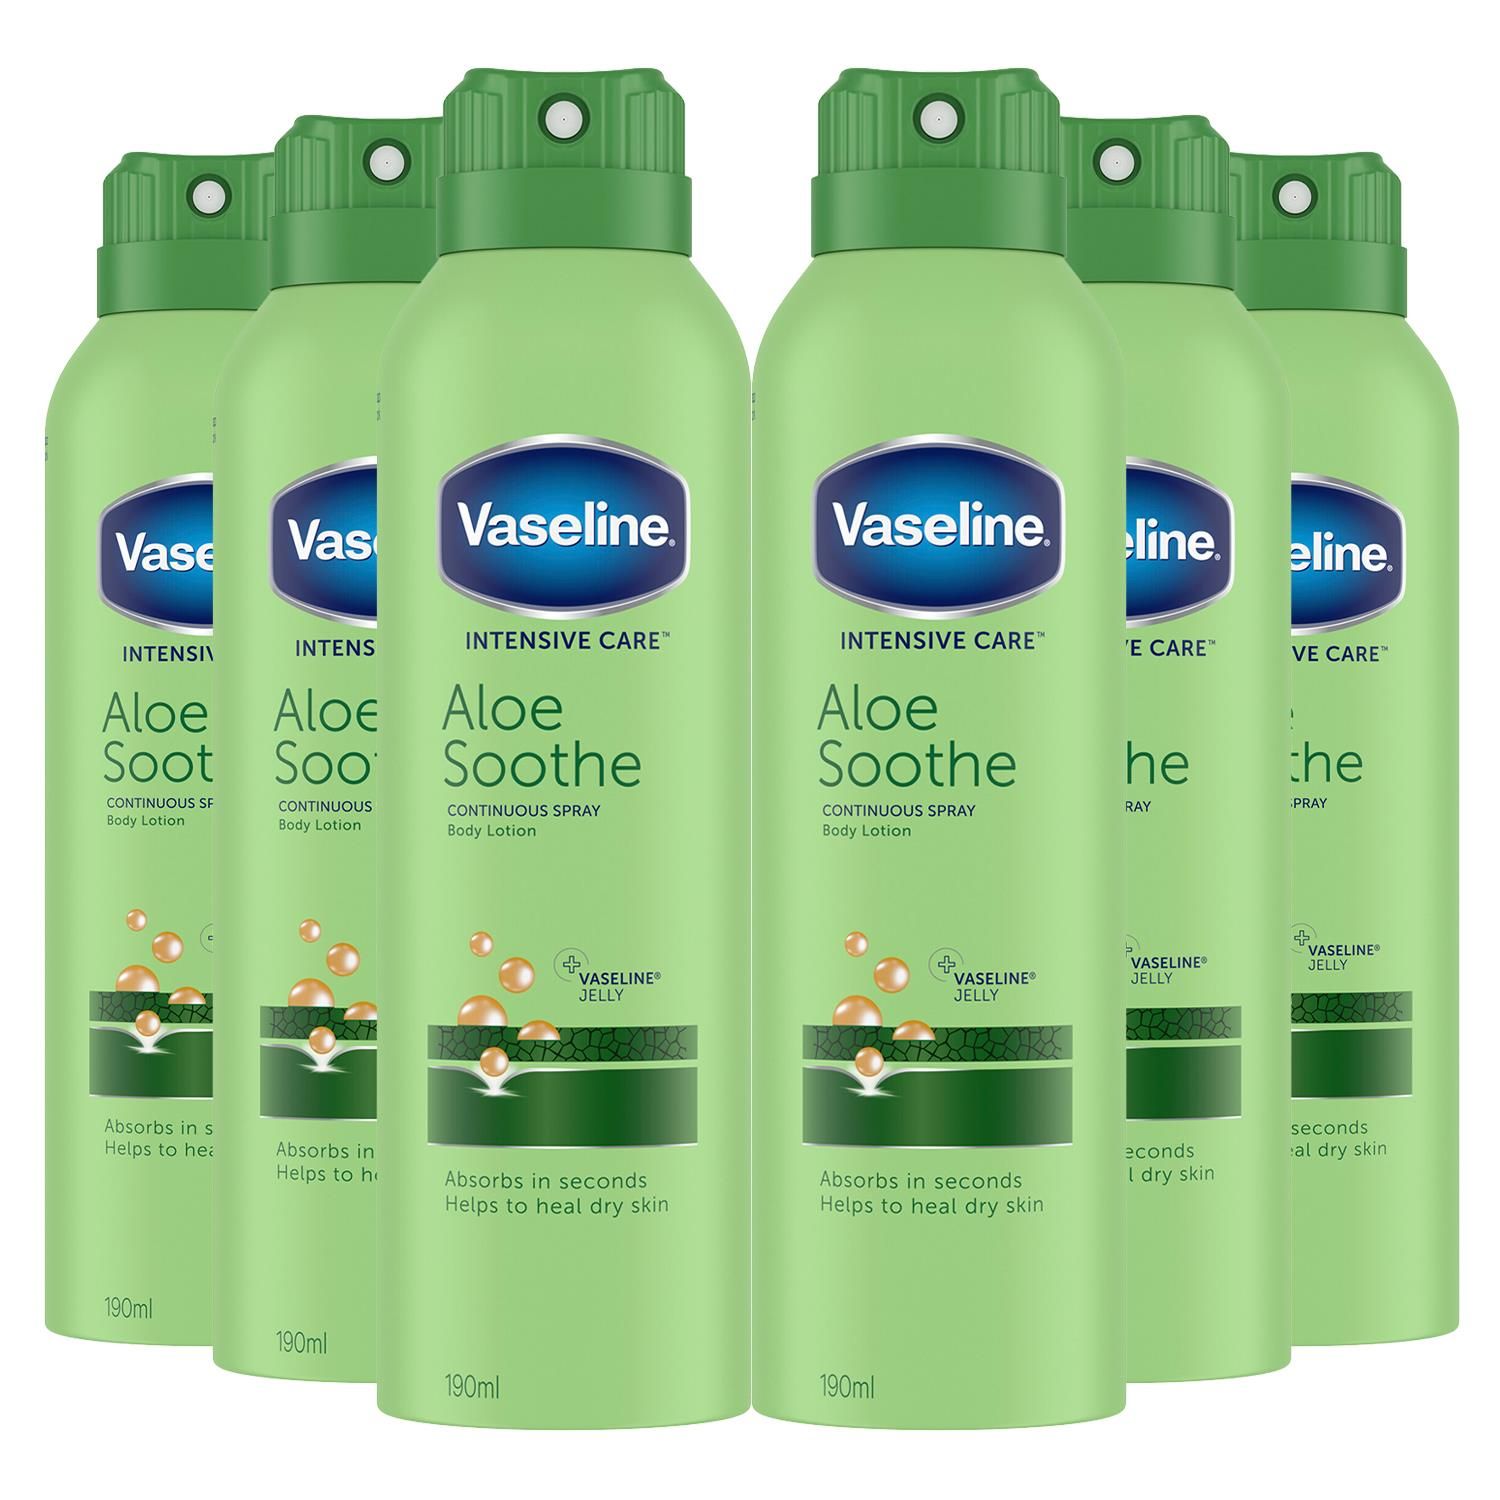 Overskyet Berri Flipper Vaseline Intensive Care Spray Lotion Aloe Soothe 190ml - 6 Pack